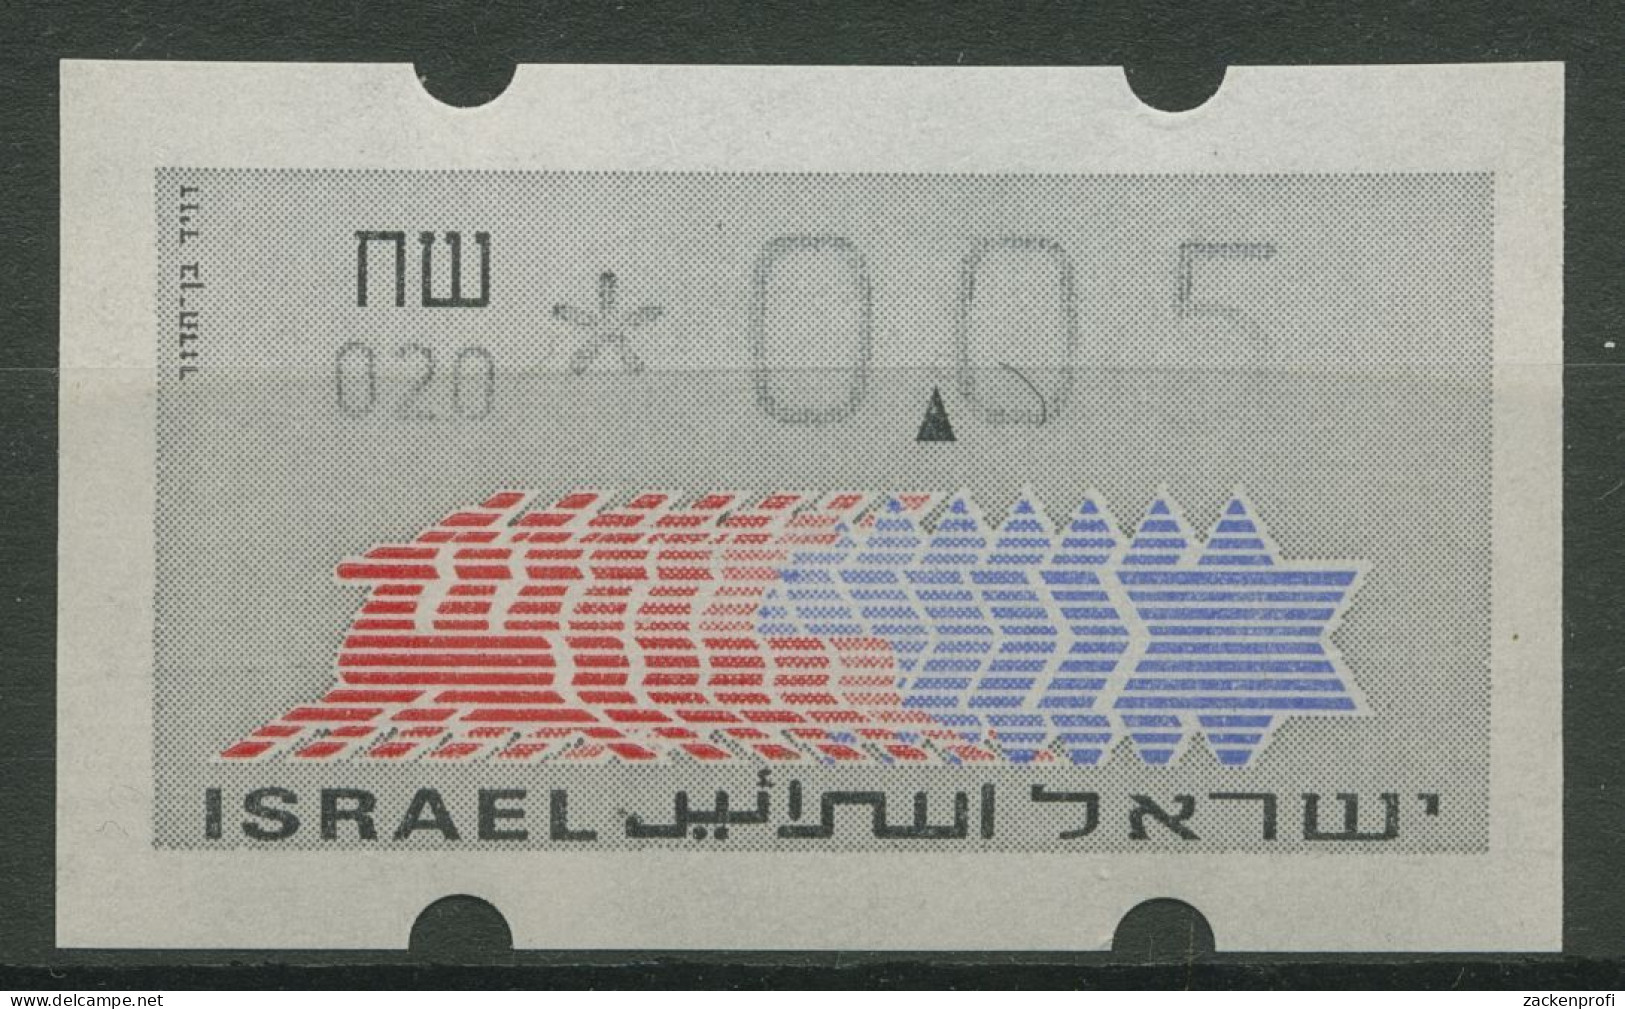 Israel ATM 1990 Hirsch Automat 020 Einzelwert ATM 3.3.20 Postfrisch - Vignettes D'affranchissement (Frama)